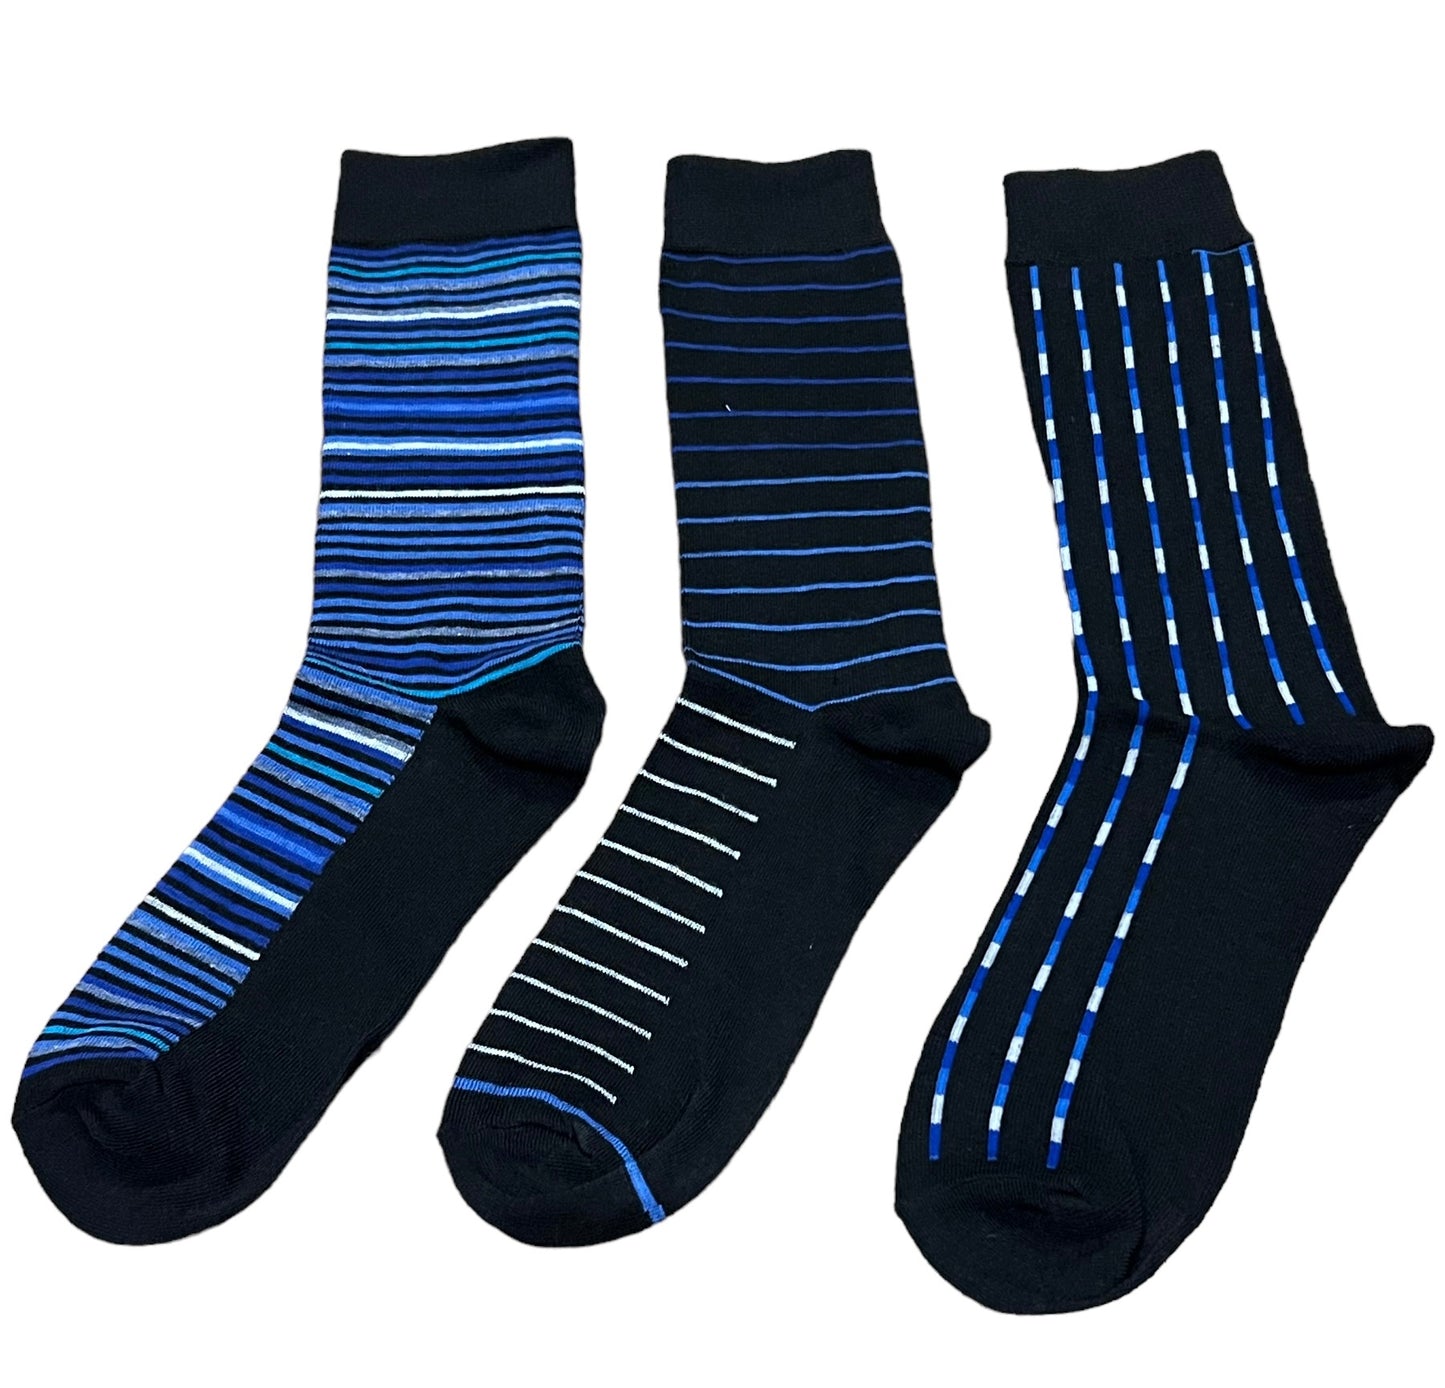 Stripes Assortment Fashion Socks in Black 3pr Pack